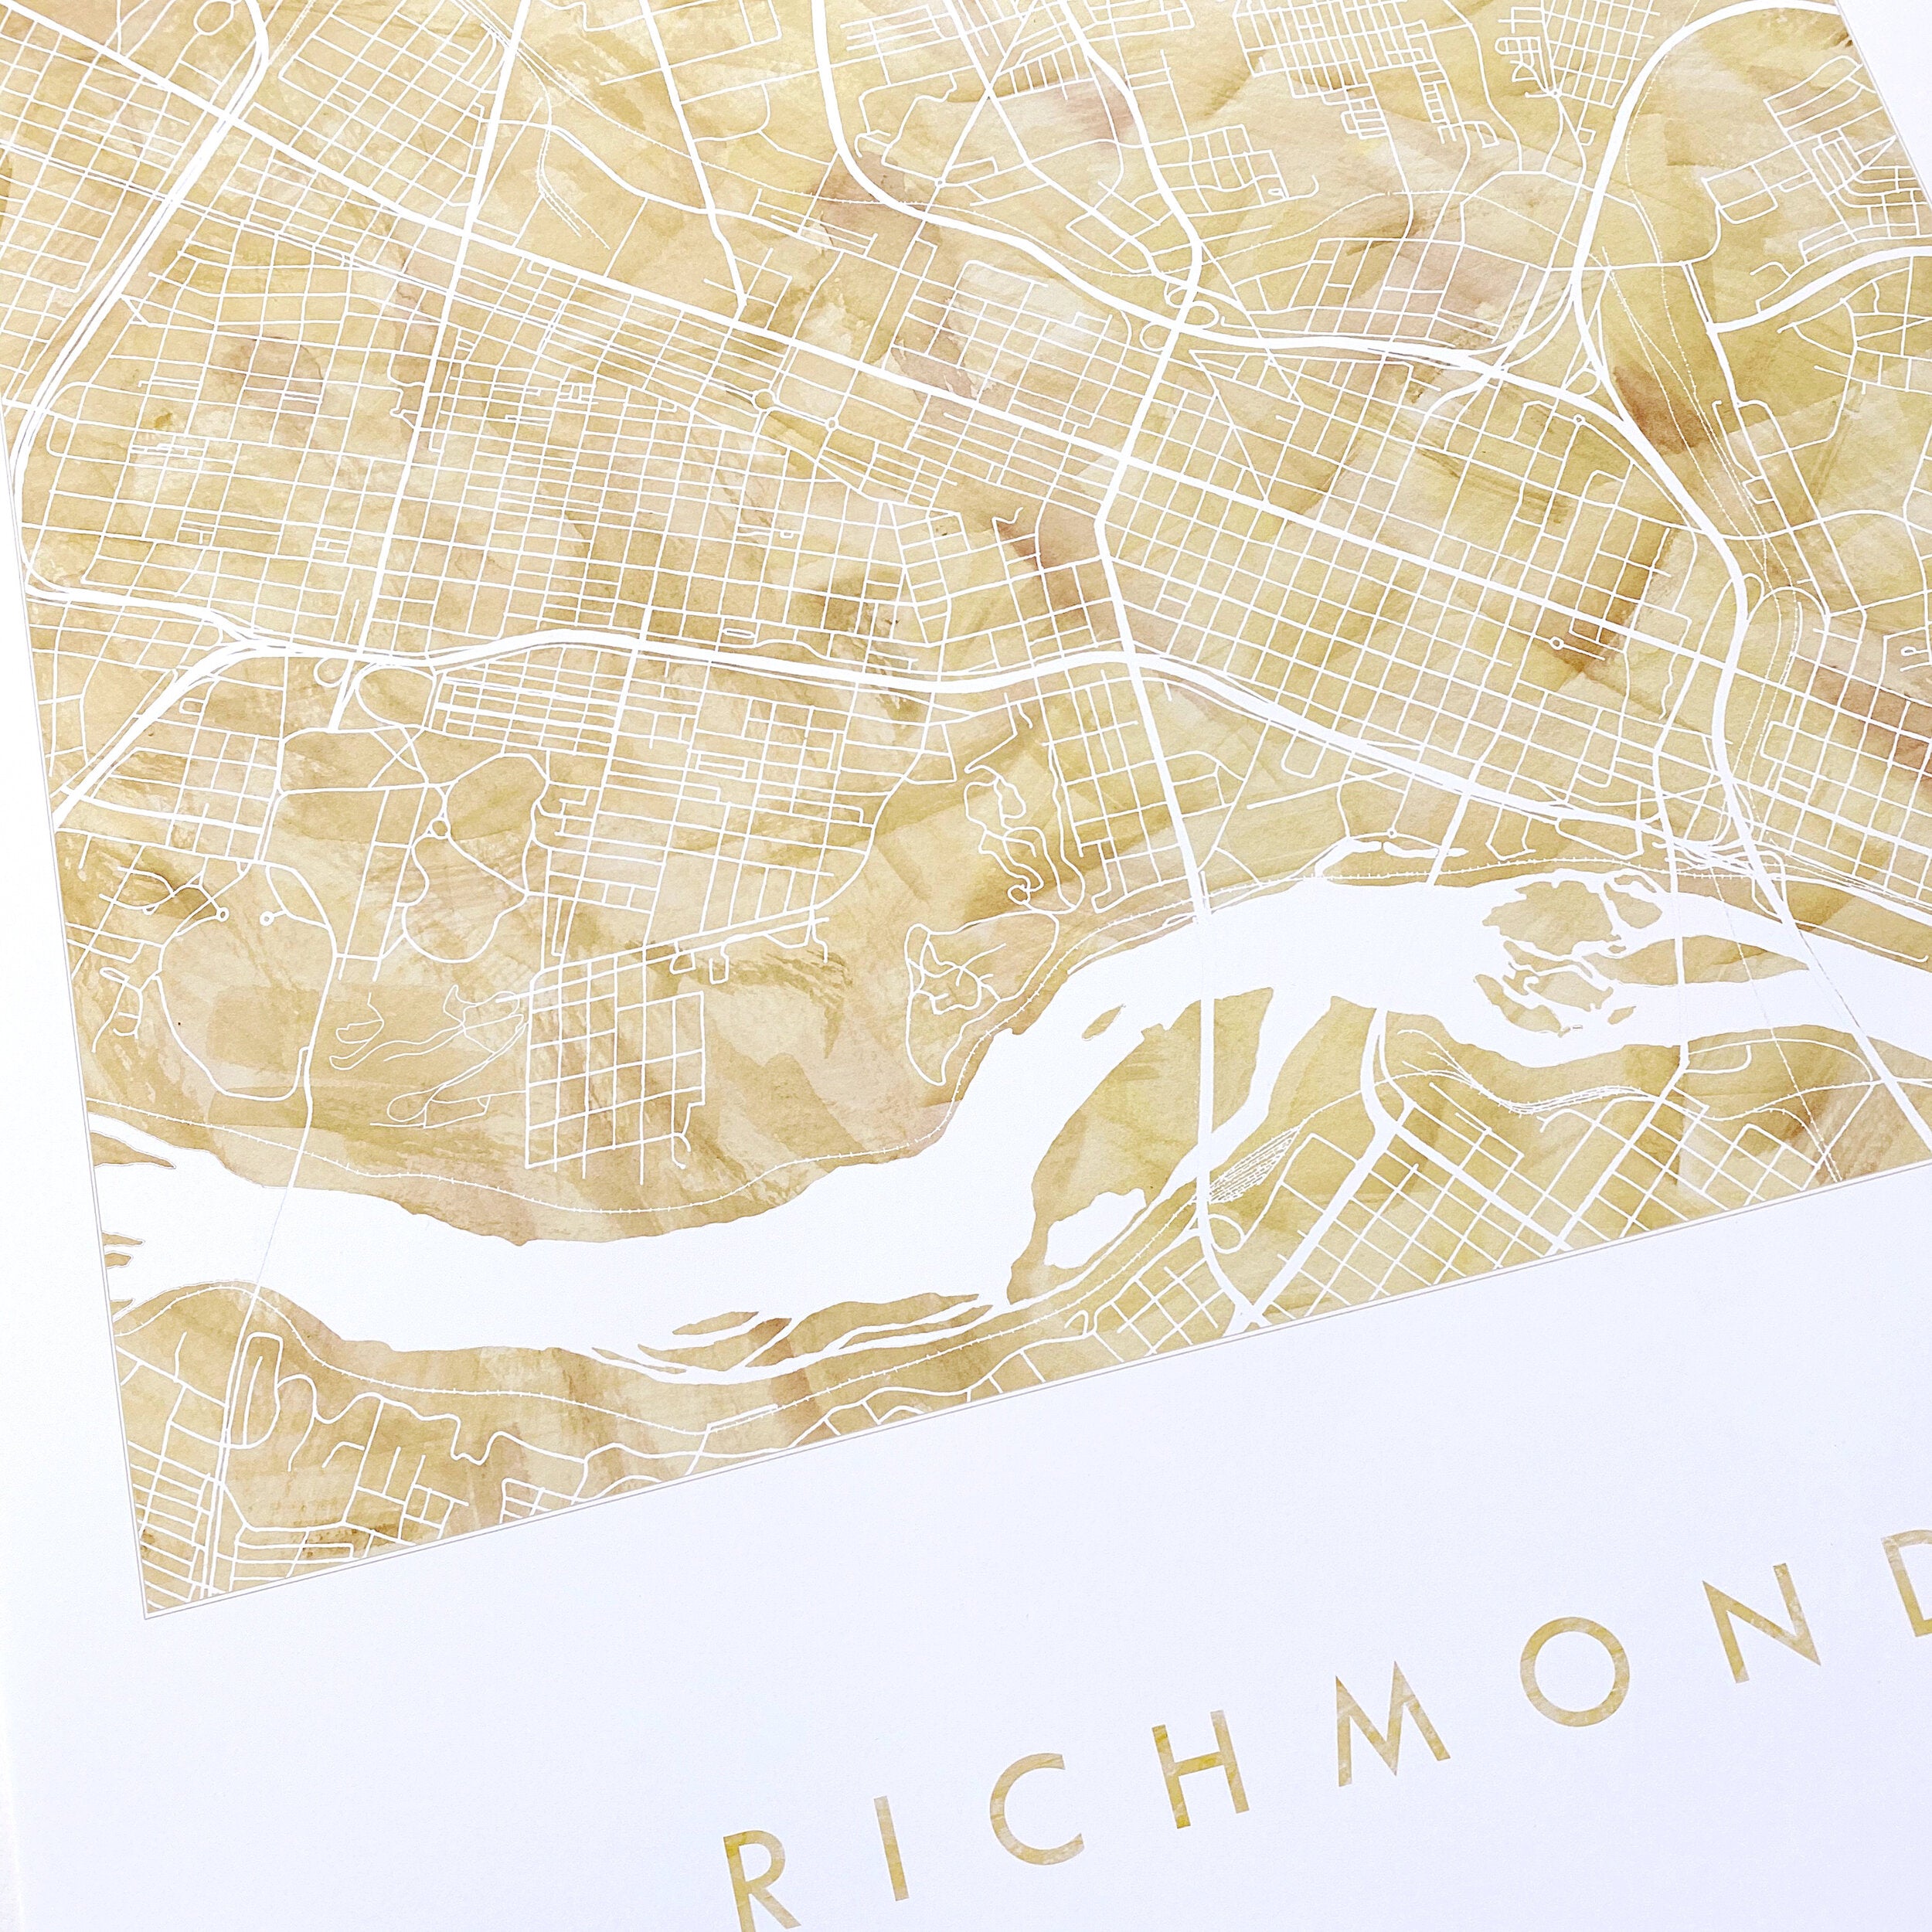 RICHMOND Watercolor Wash Map: PRINT